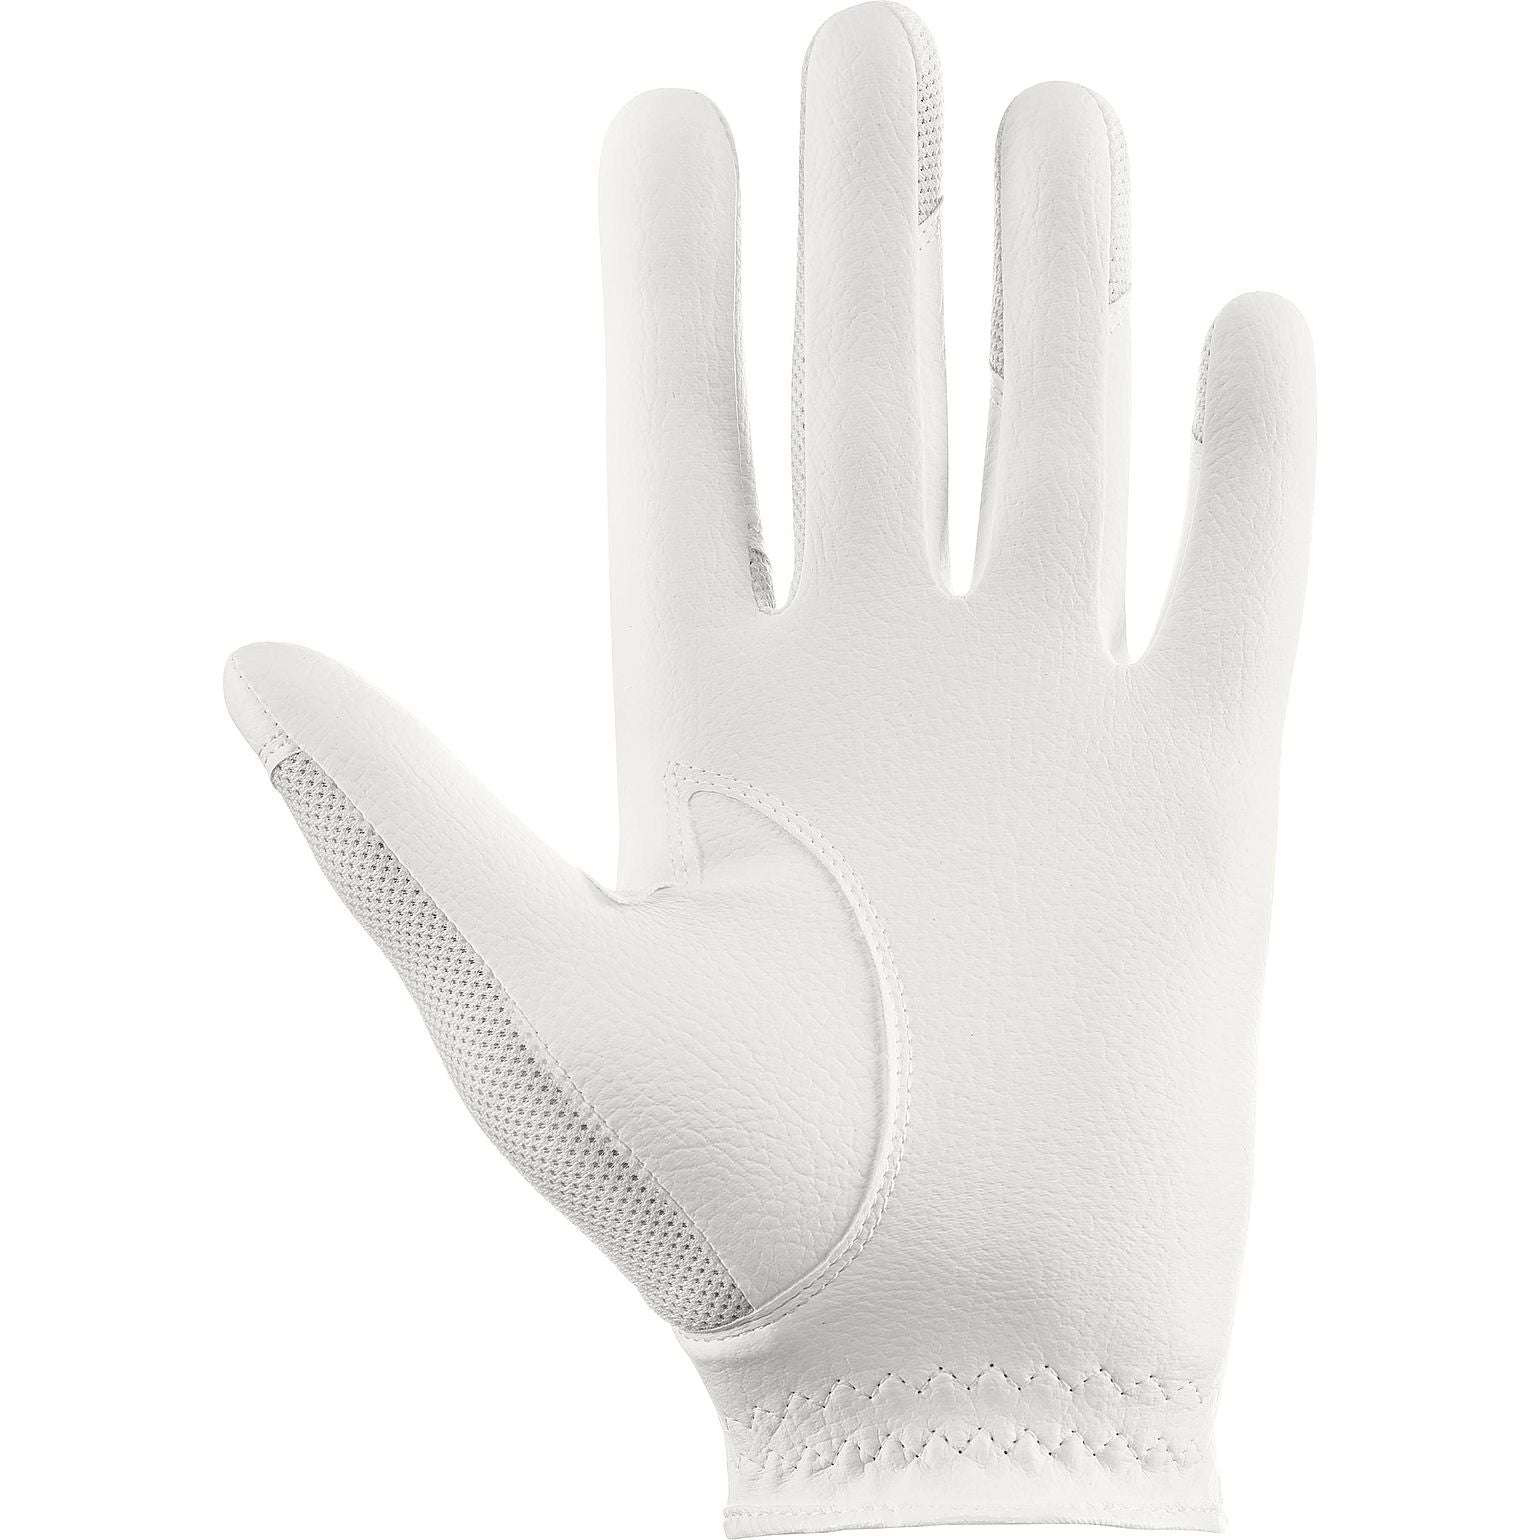 Uvex Sumair Gloves